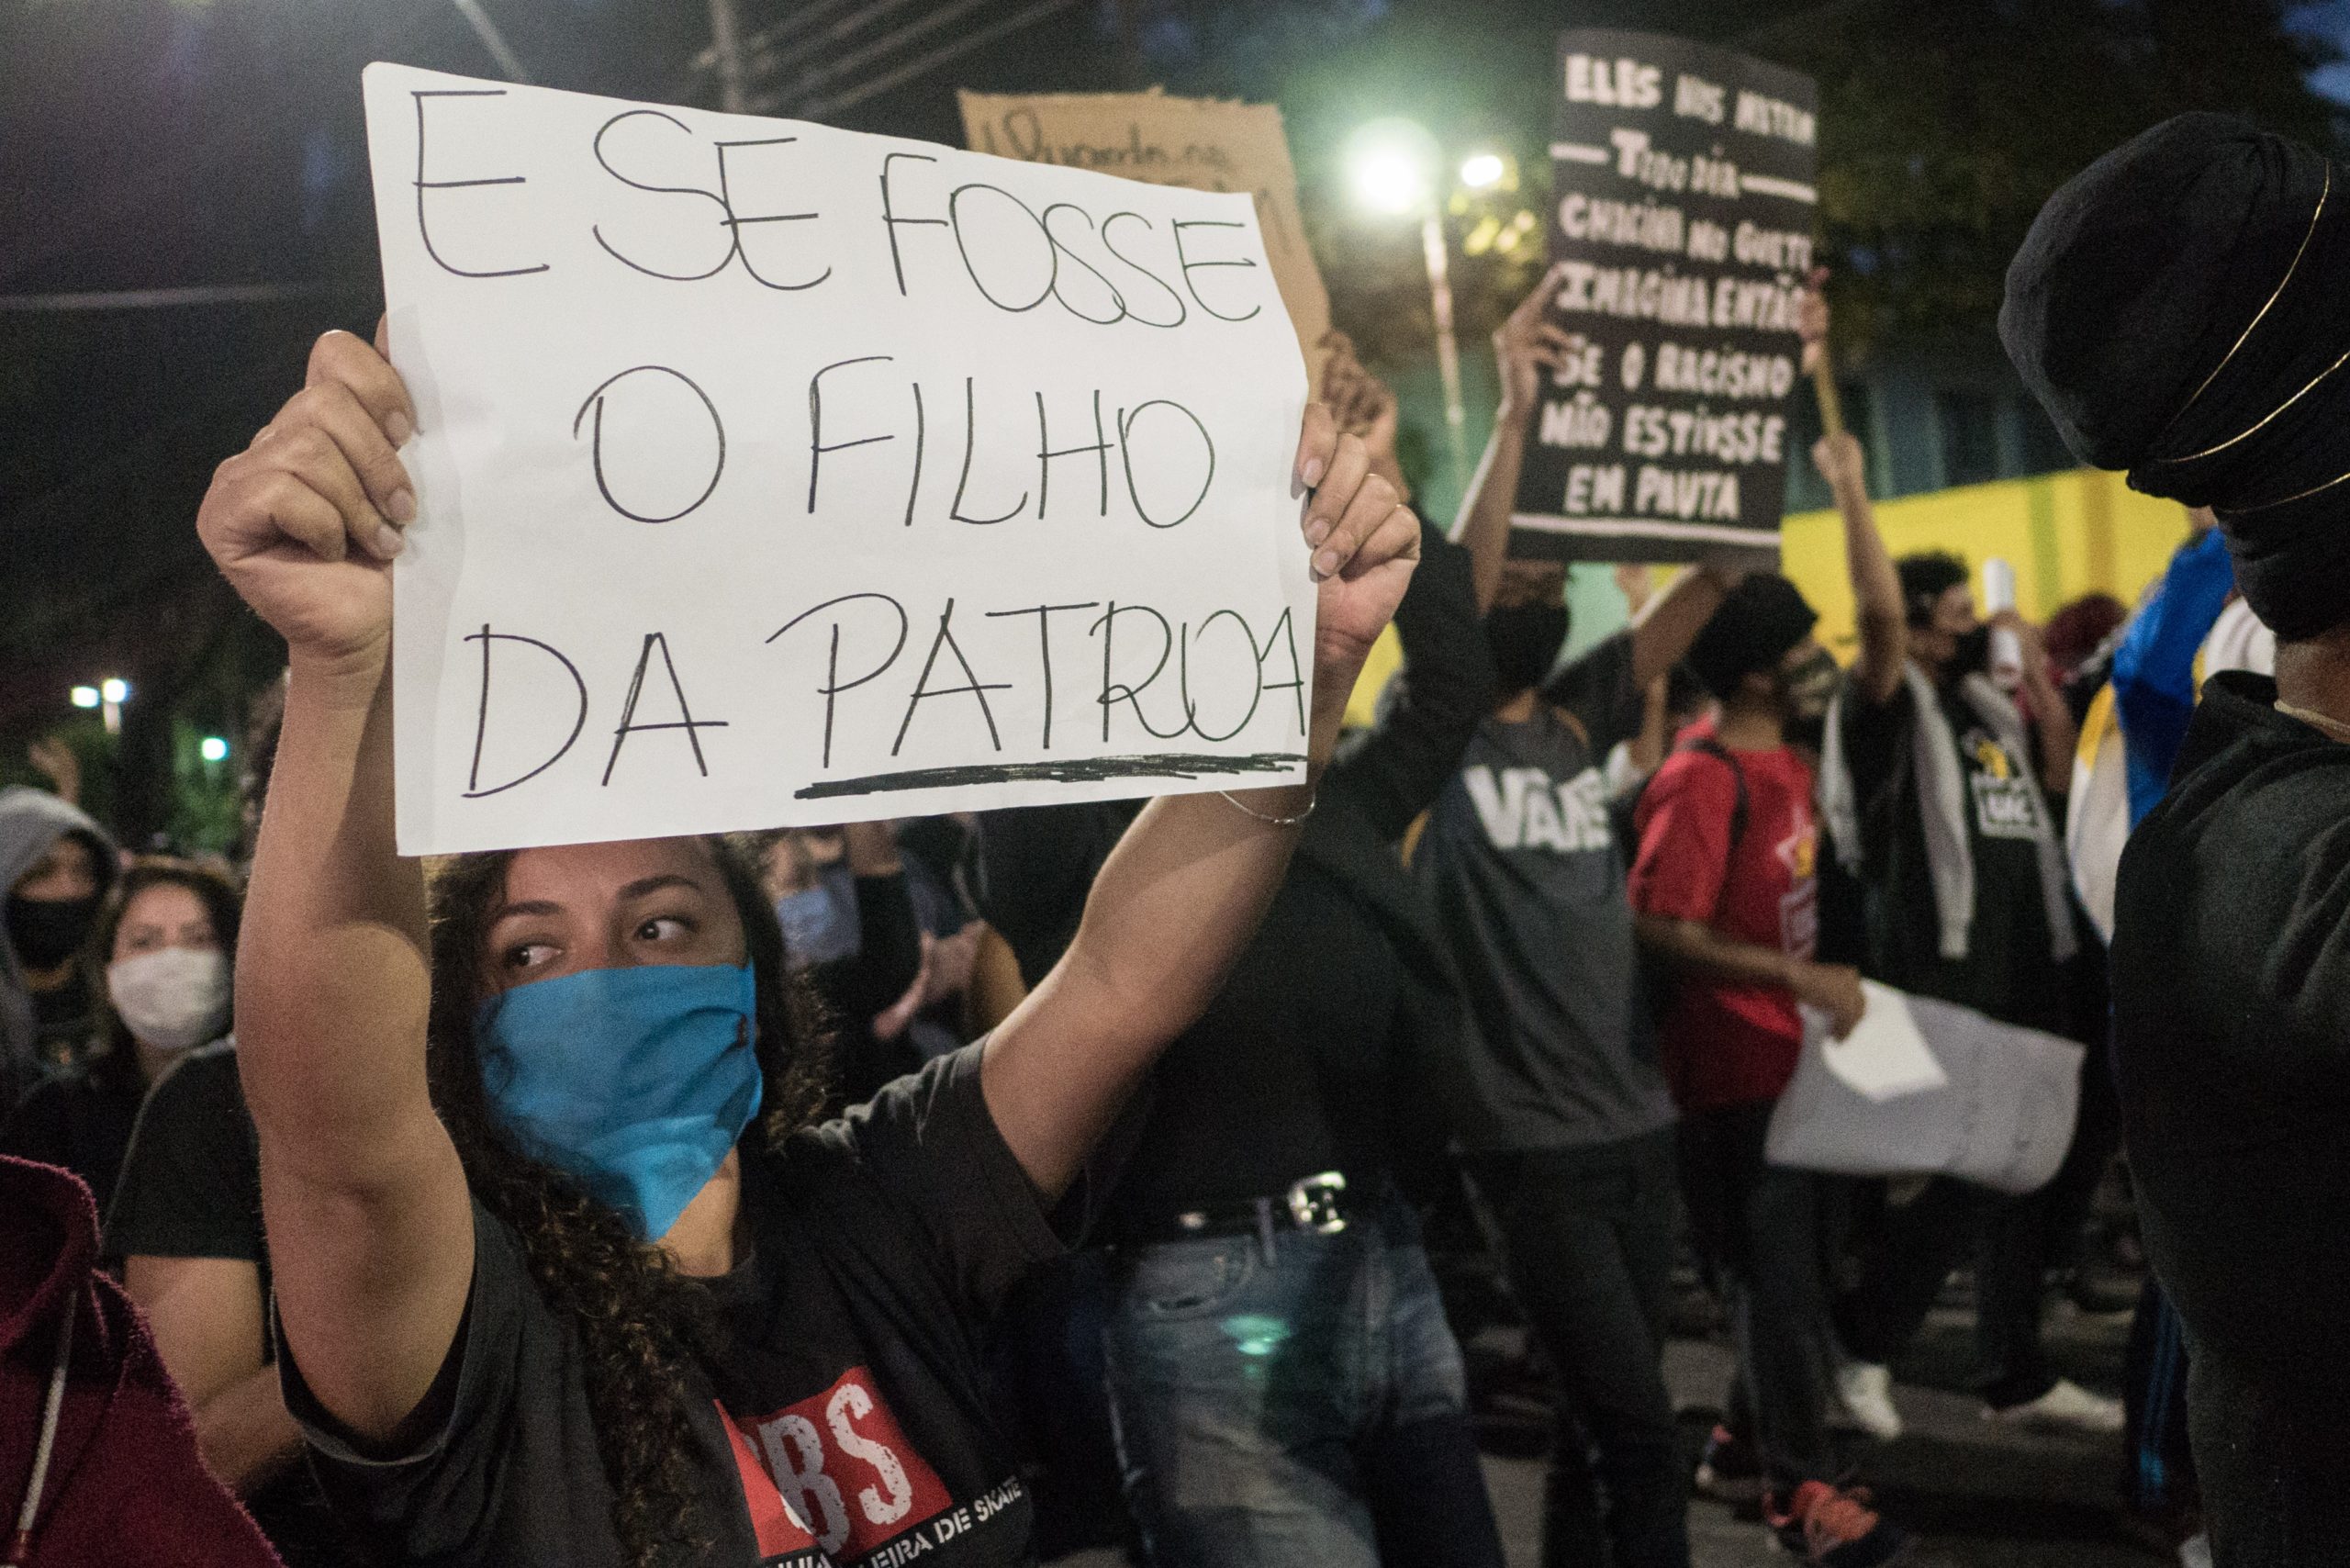 Brazil: Distrust and Fragmentation